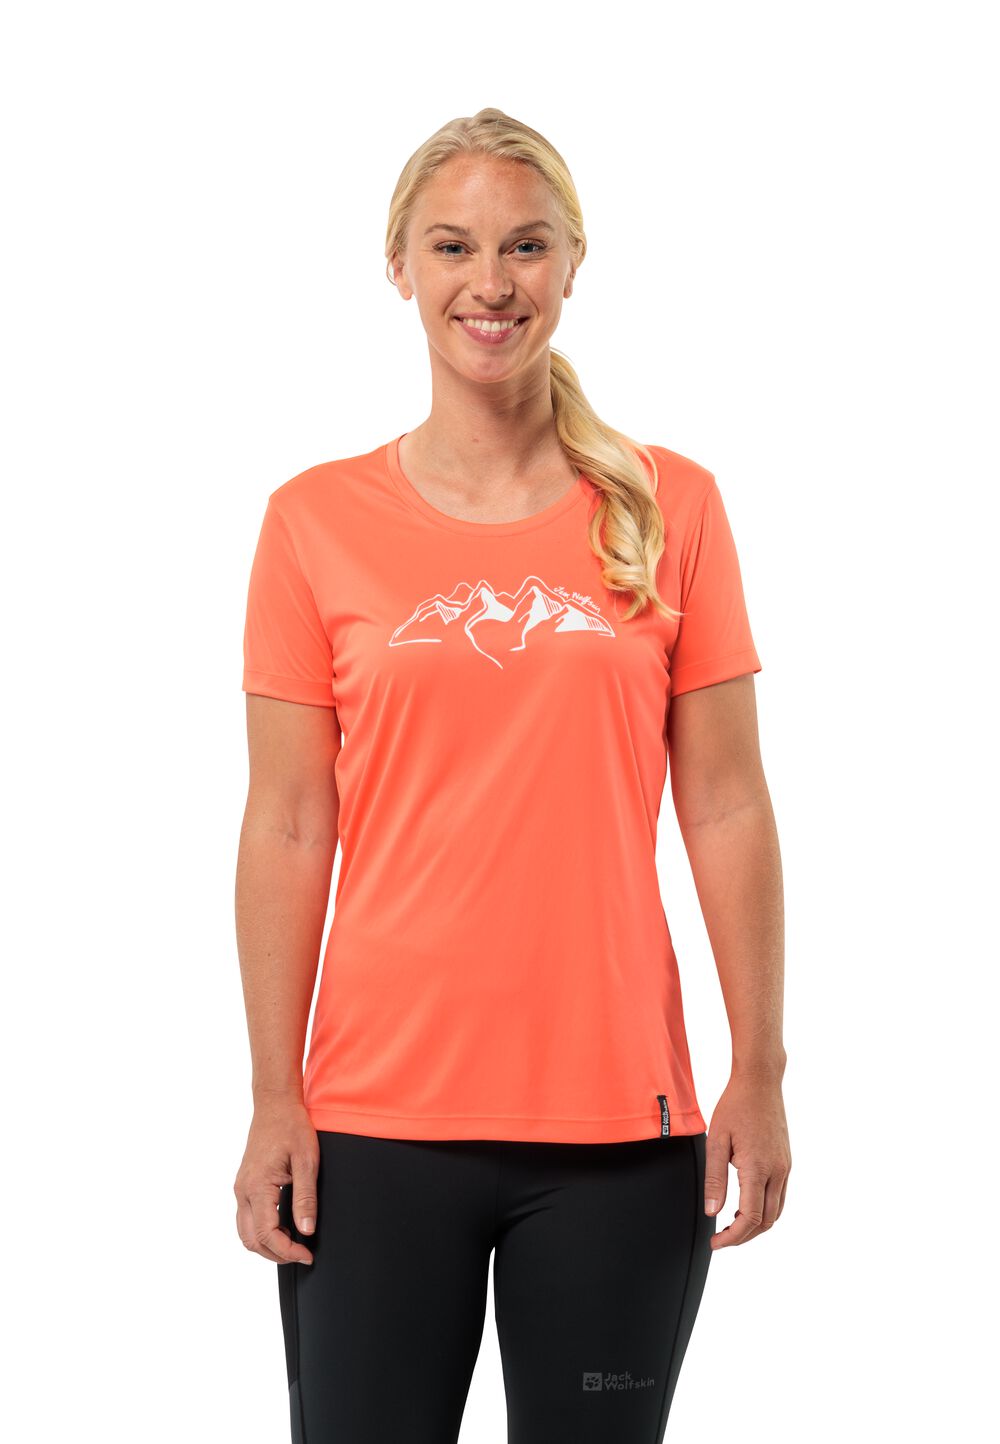 Jack Wolfskin Peak Graphic T-Shirt Women Functioneel shirt Dames L rood digital orange